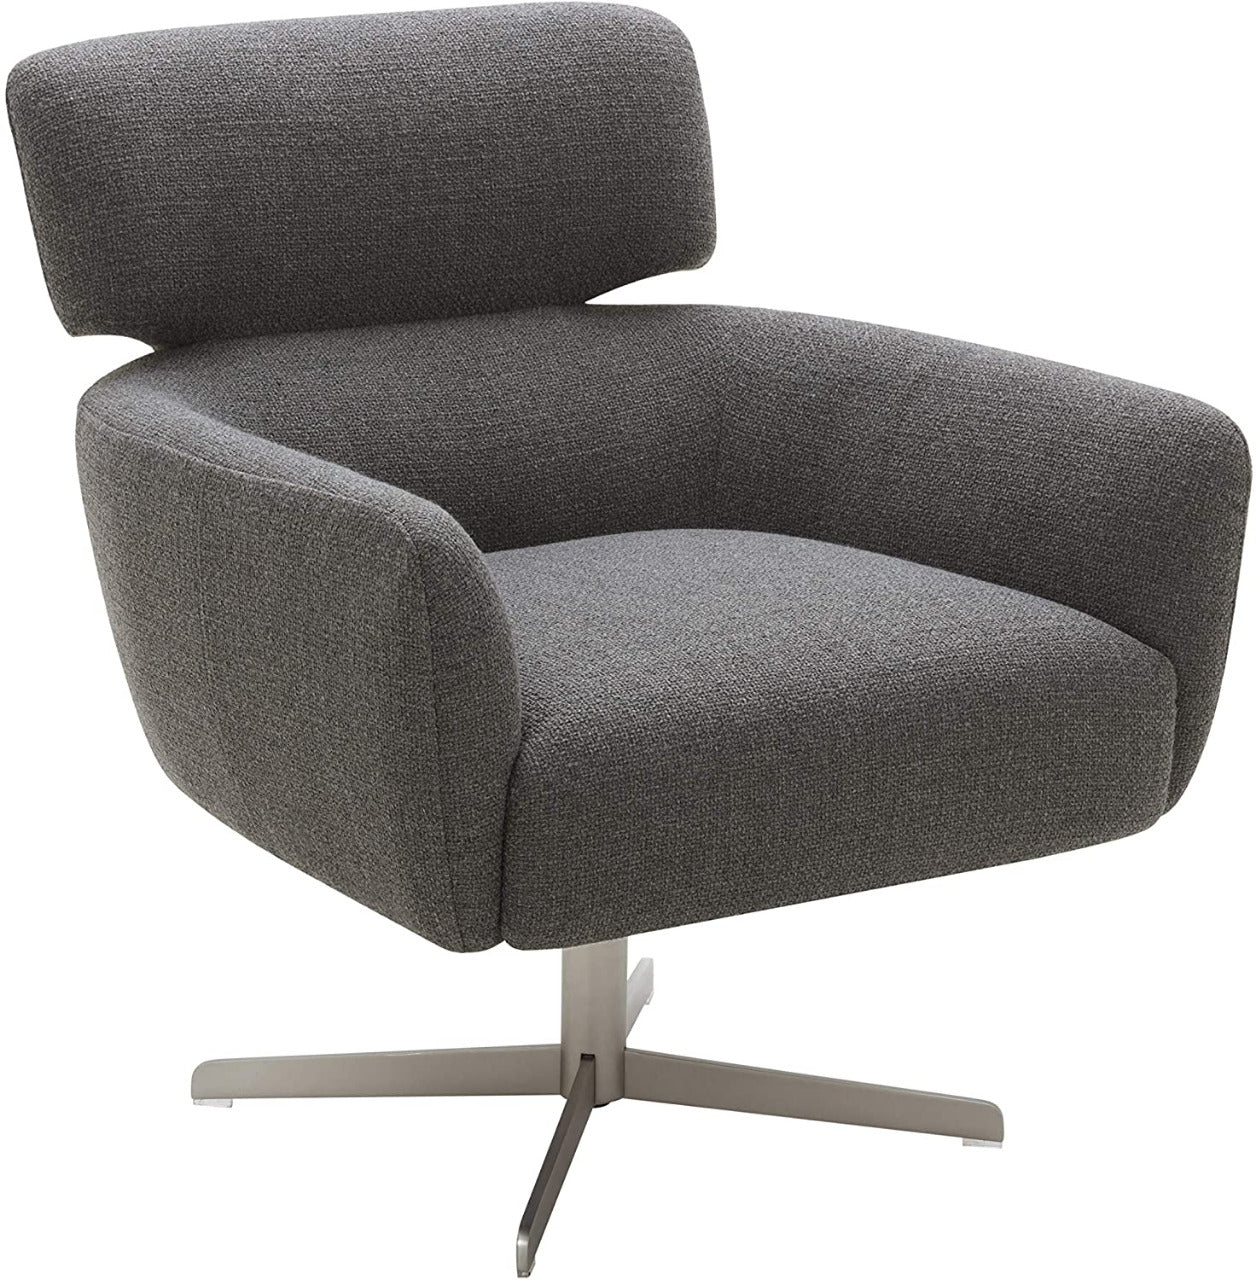 Sofa Chair: Living Room Sofa